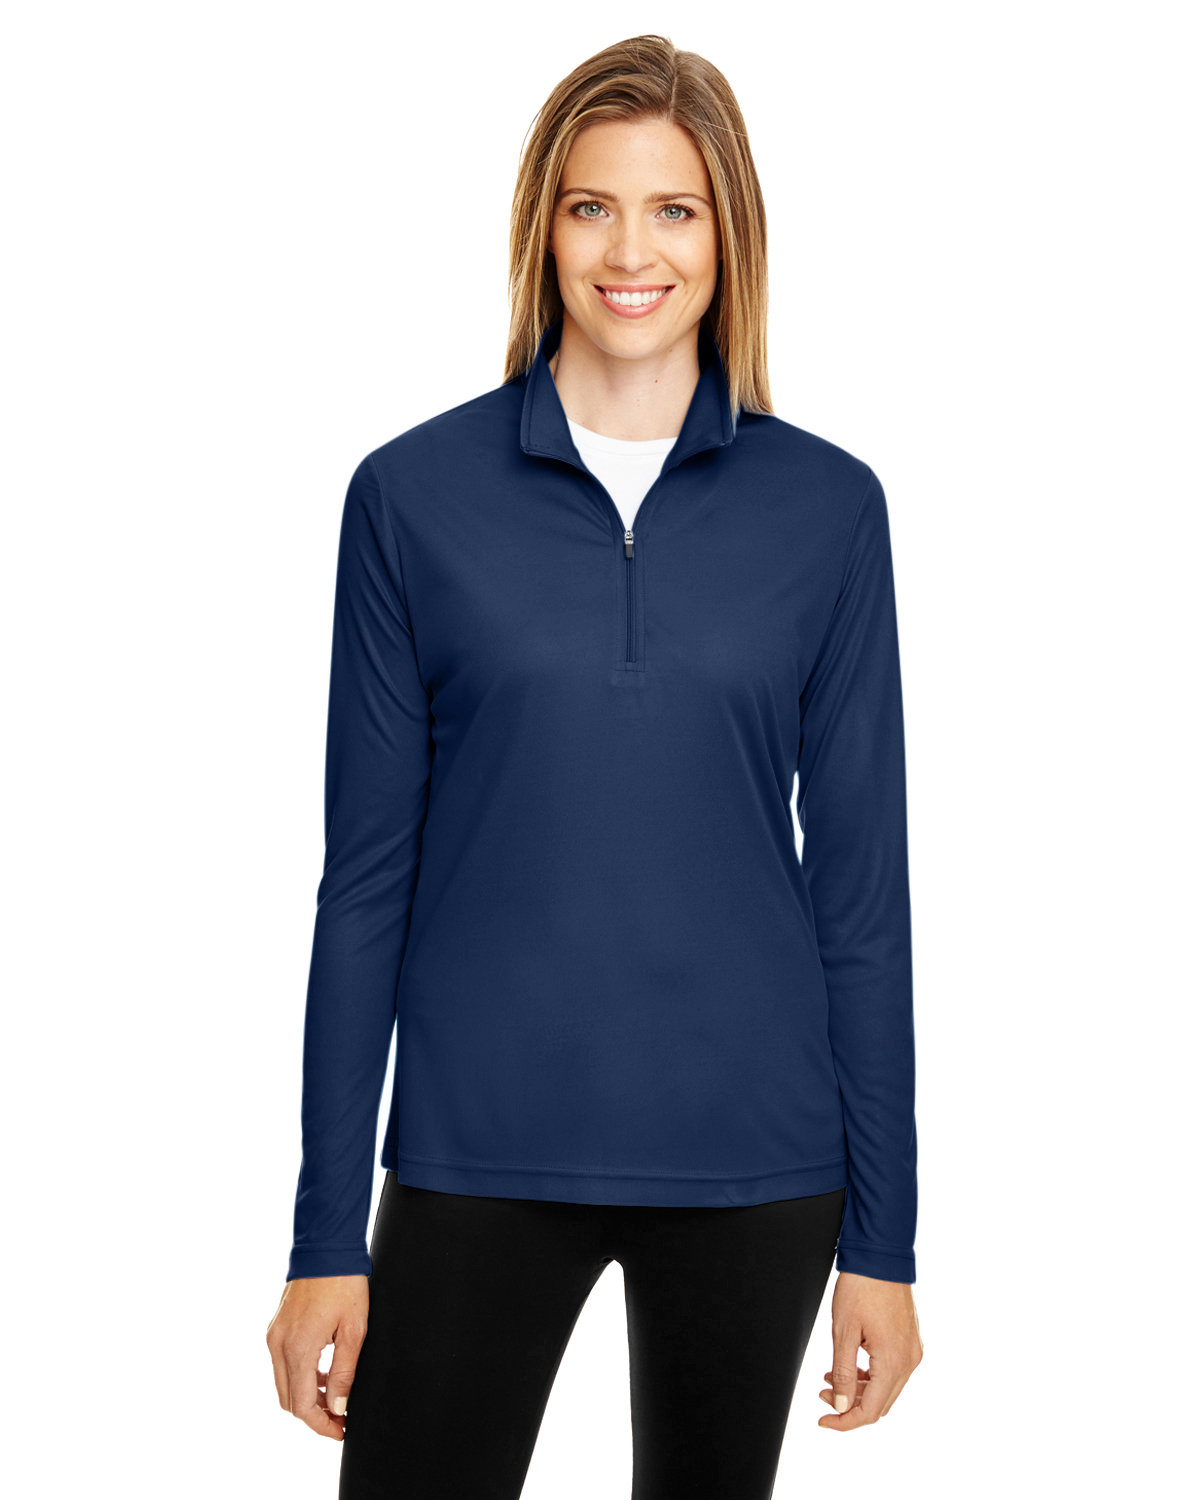 Buy Aep Prompt Women's Fitness Short Sleeve Full Zip Jersey - Capri Blue  online